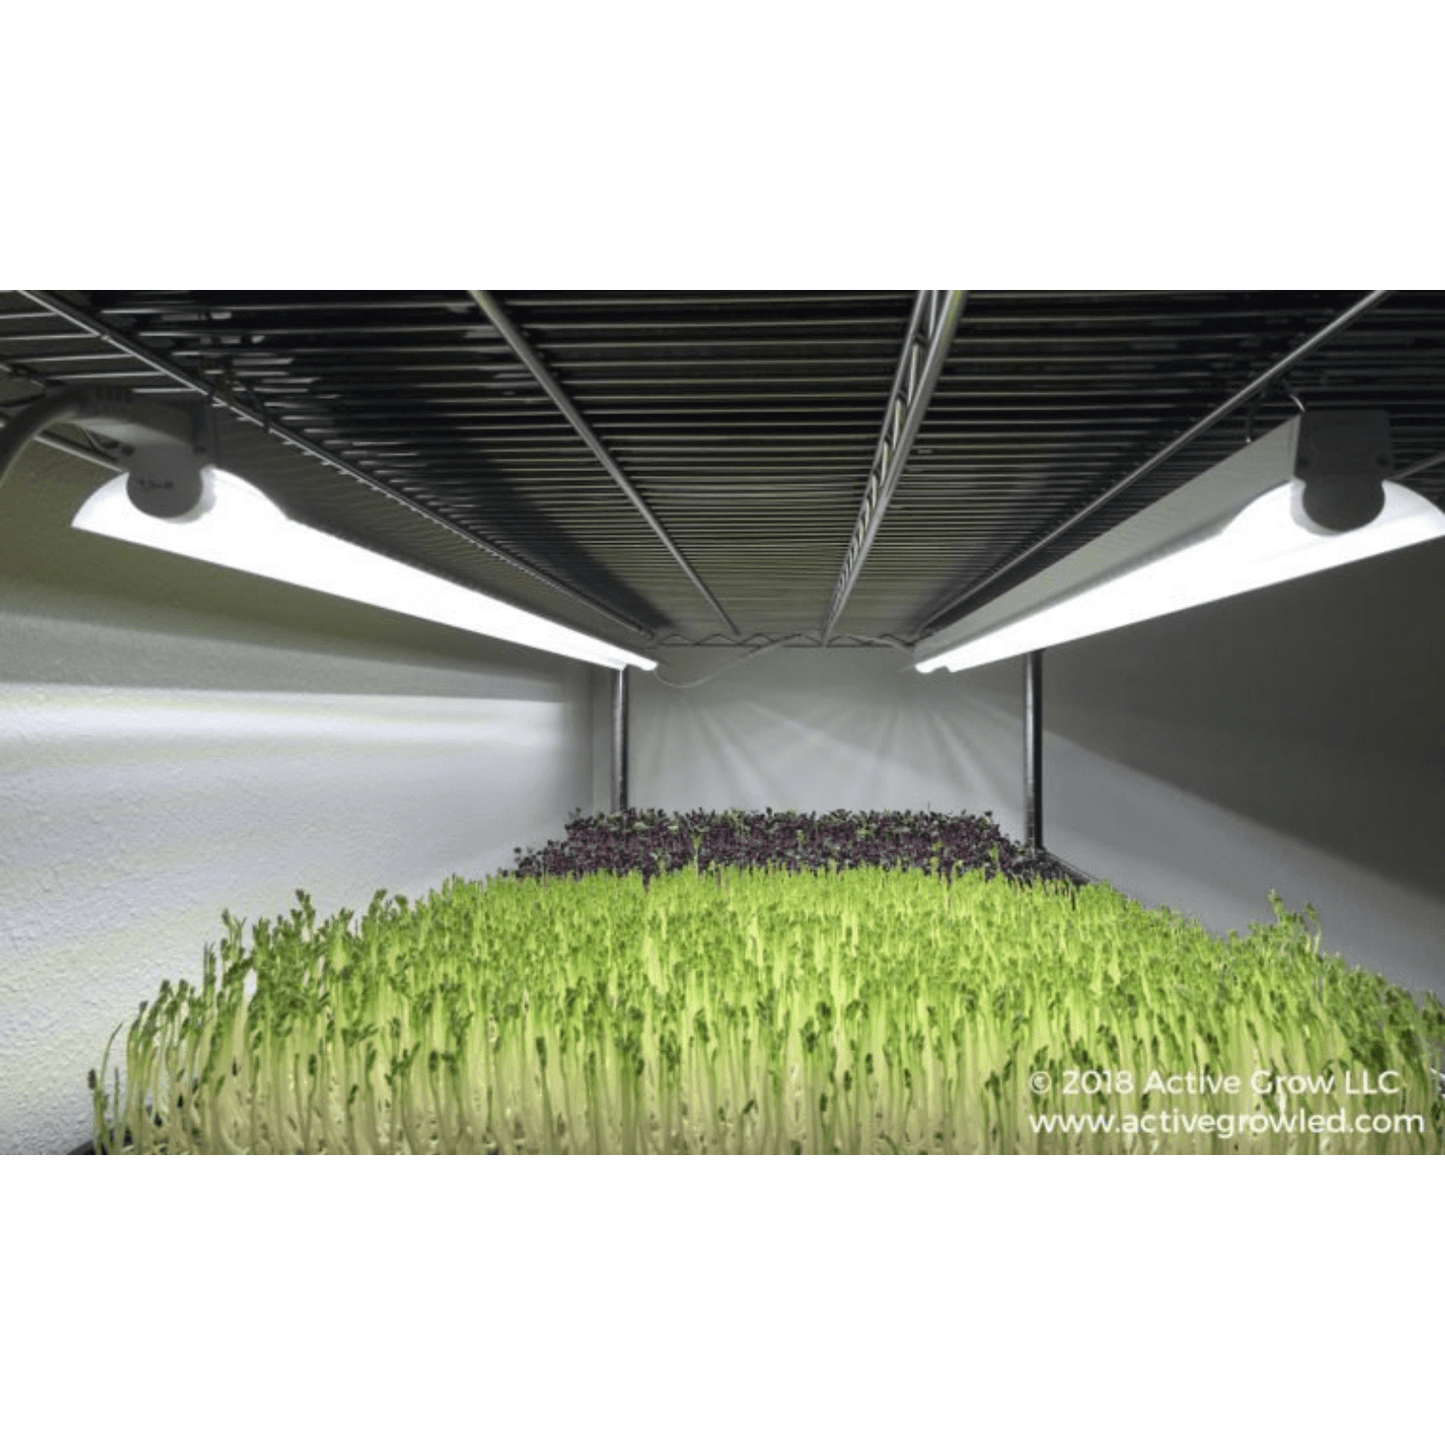 Active Grow 22W T5 4FT Horticultural Strip Light - Red Bloom Pro Spectrum AG/22STRIP/4FT/PR/2 Grow Lights 709402456025